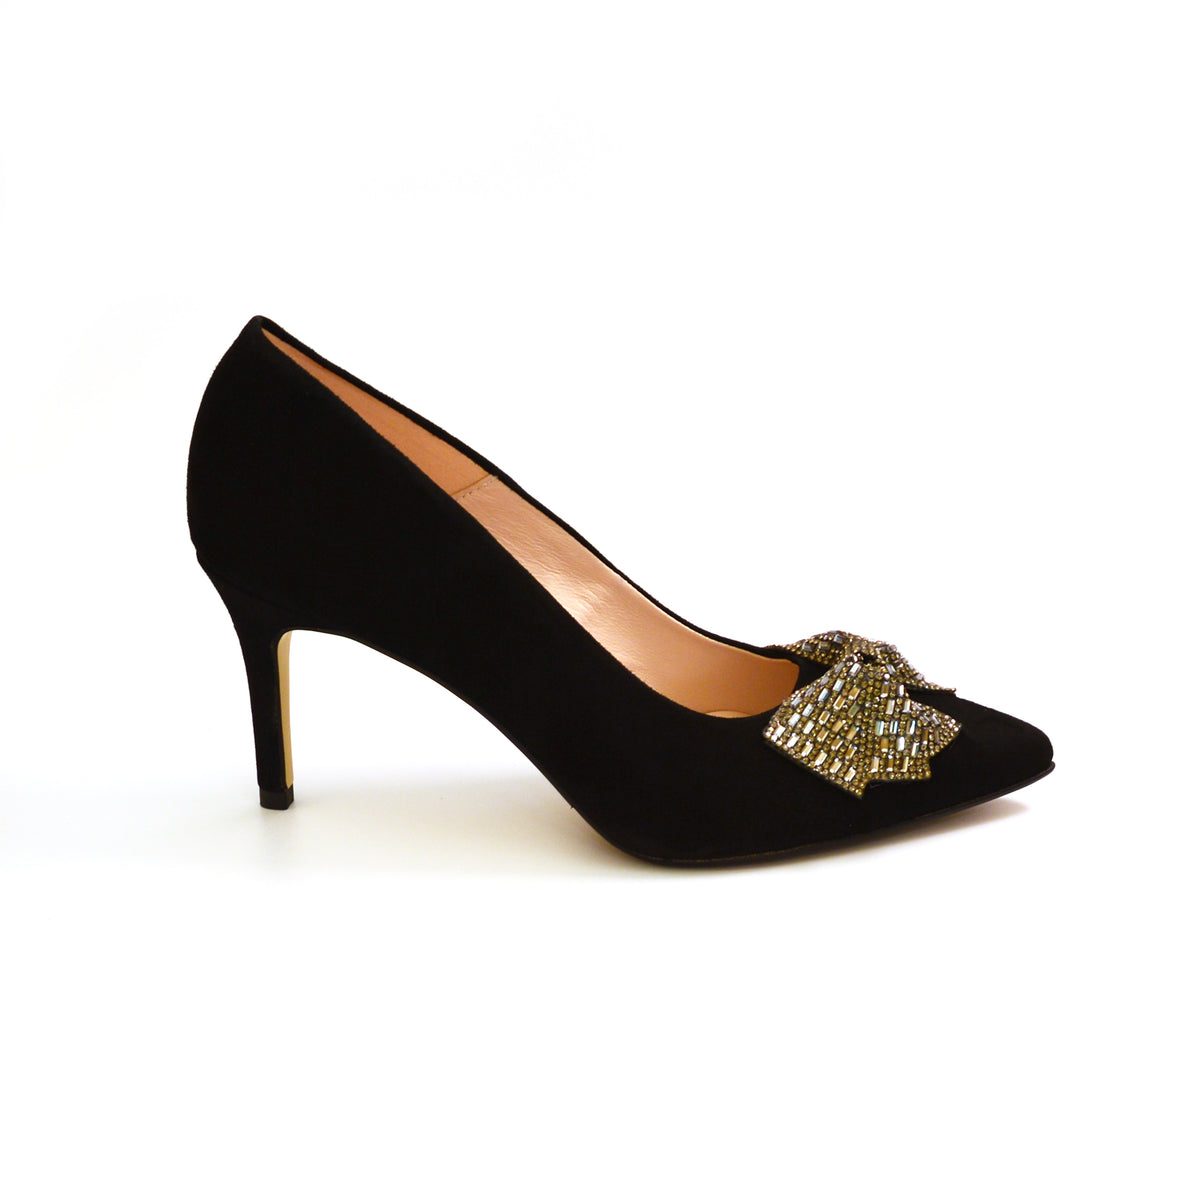 SAMPLE SALE Felicity heels